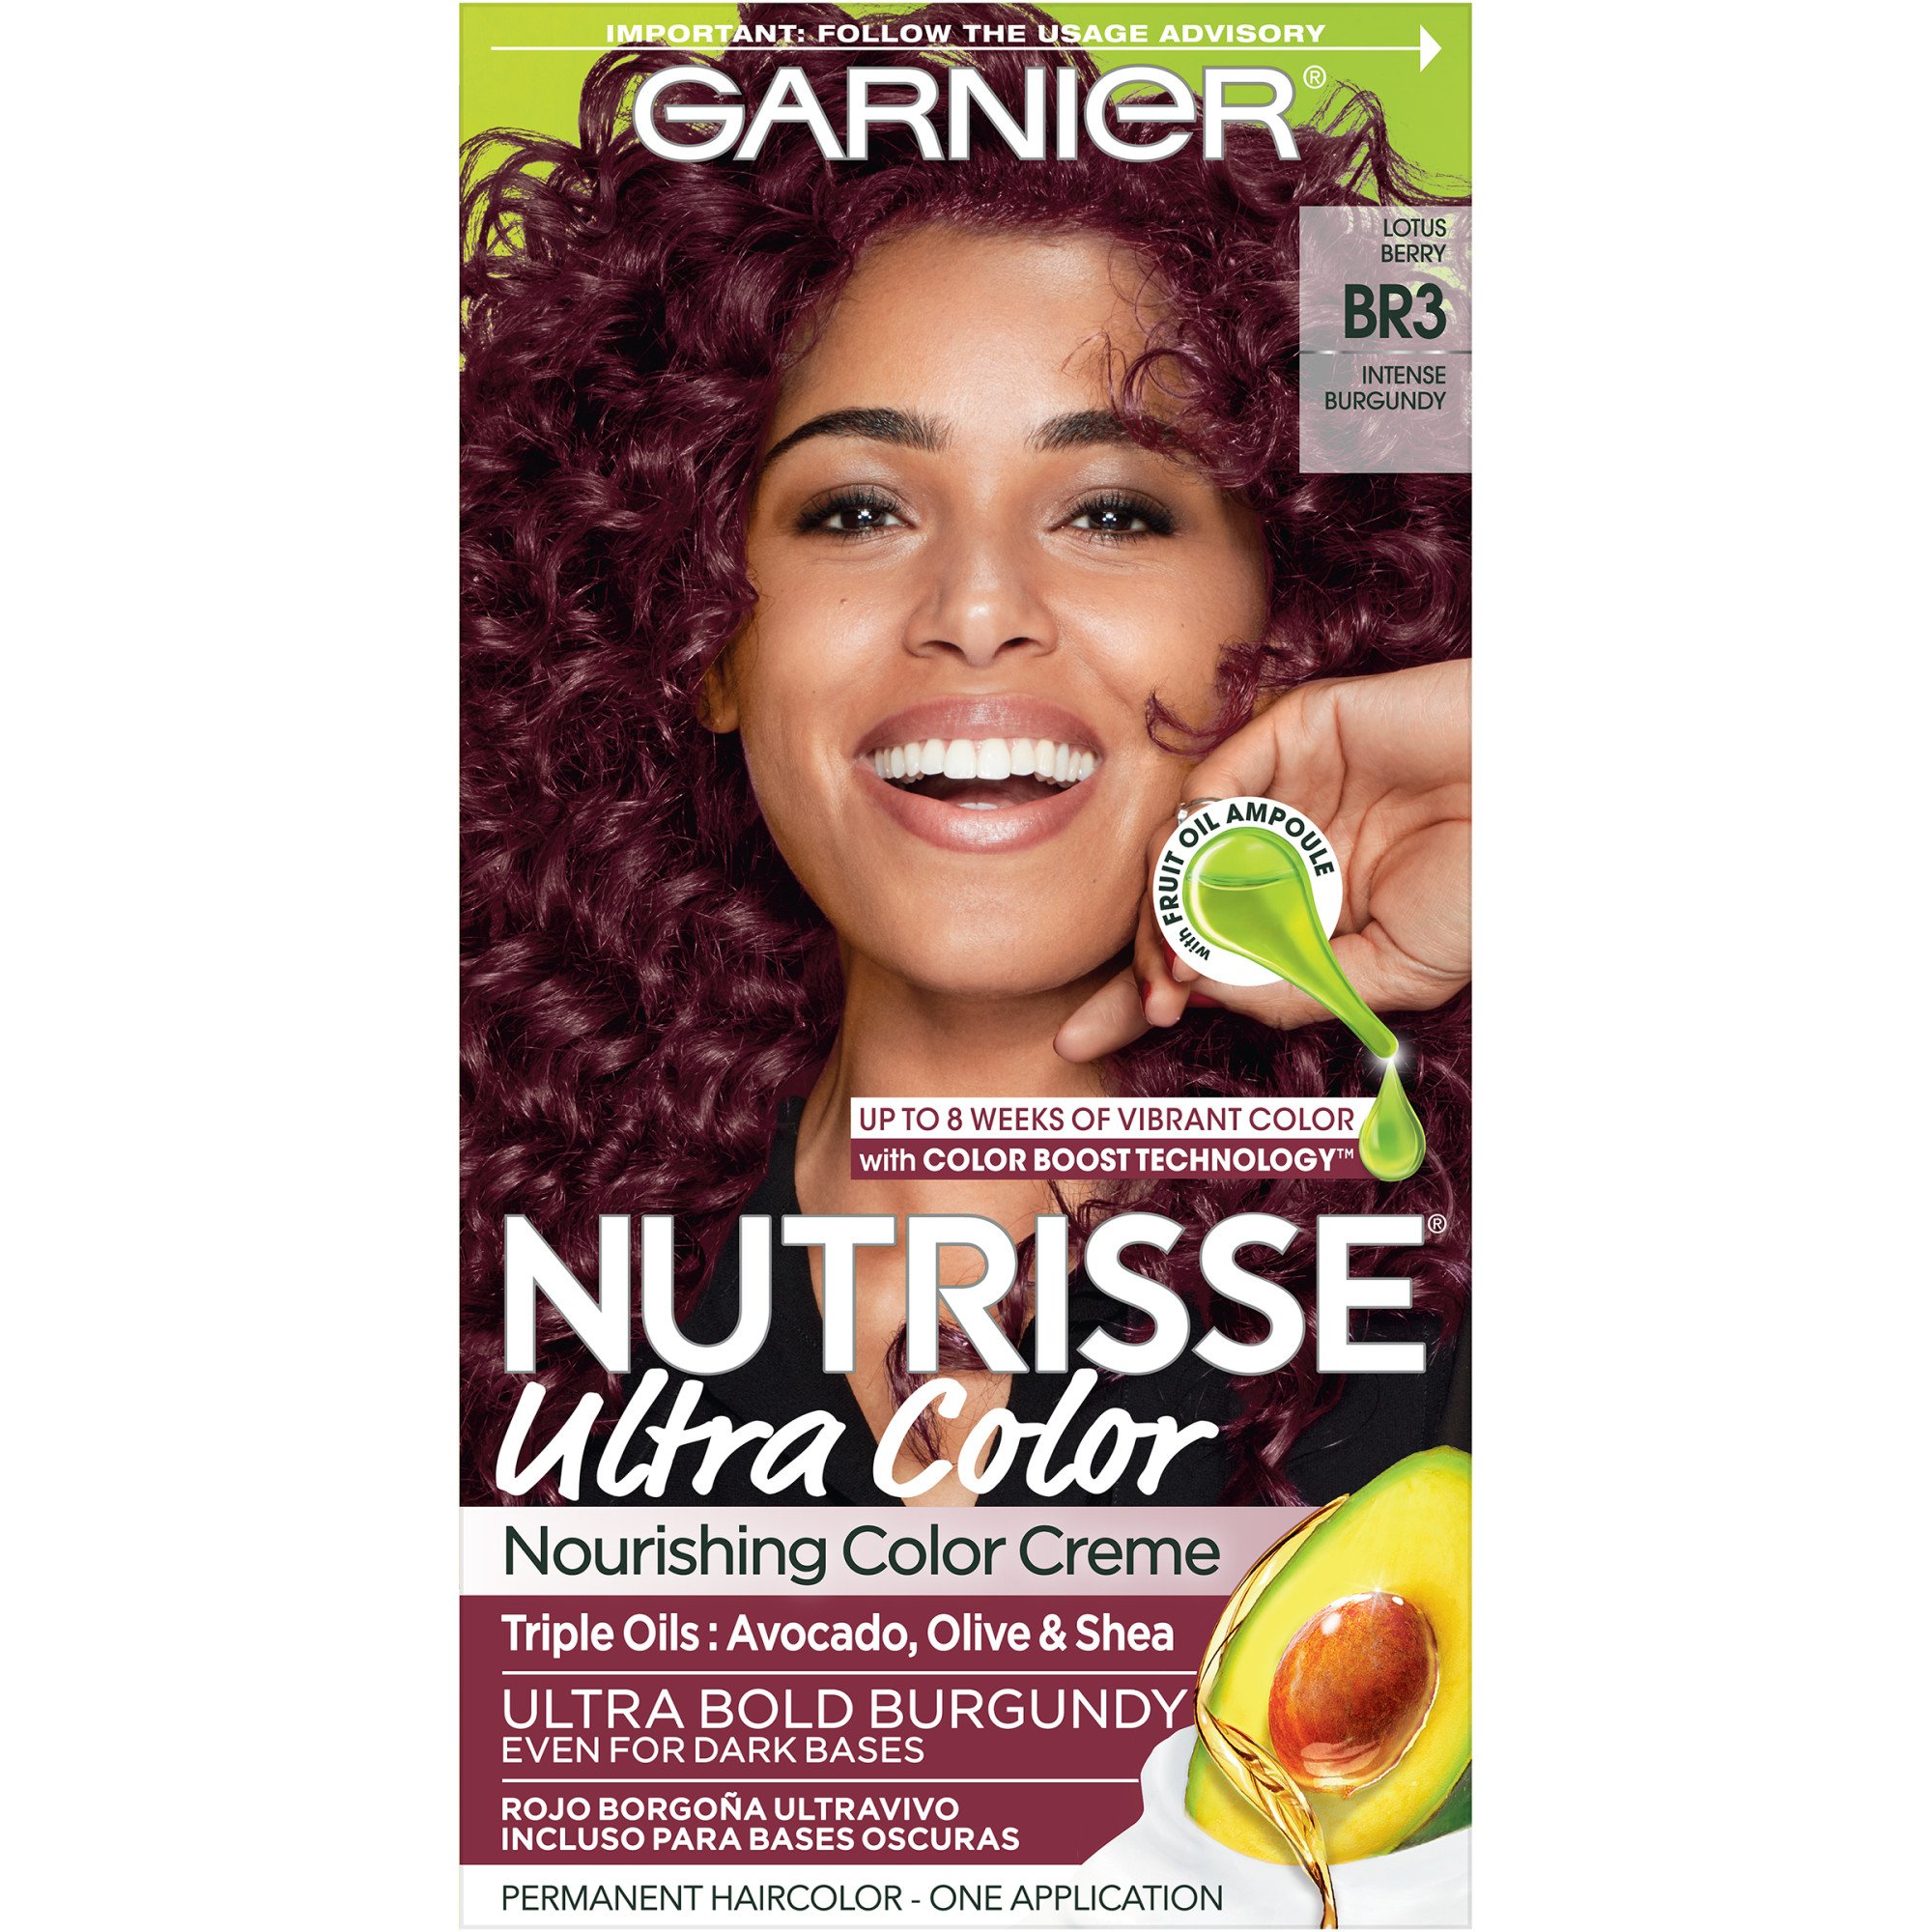 Garnier Nutrisse Ultra Color Nourishing Bold Permanent Hair Color Creme BR3  Intense Burgundy - Shop Hair Care at H-E-B